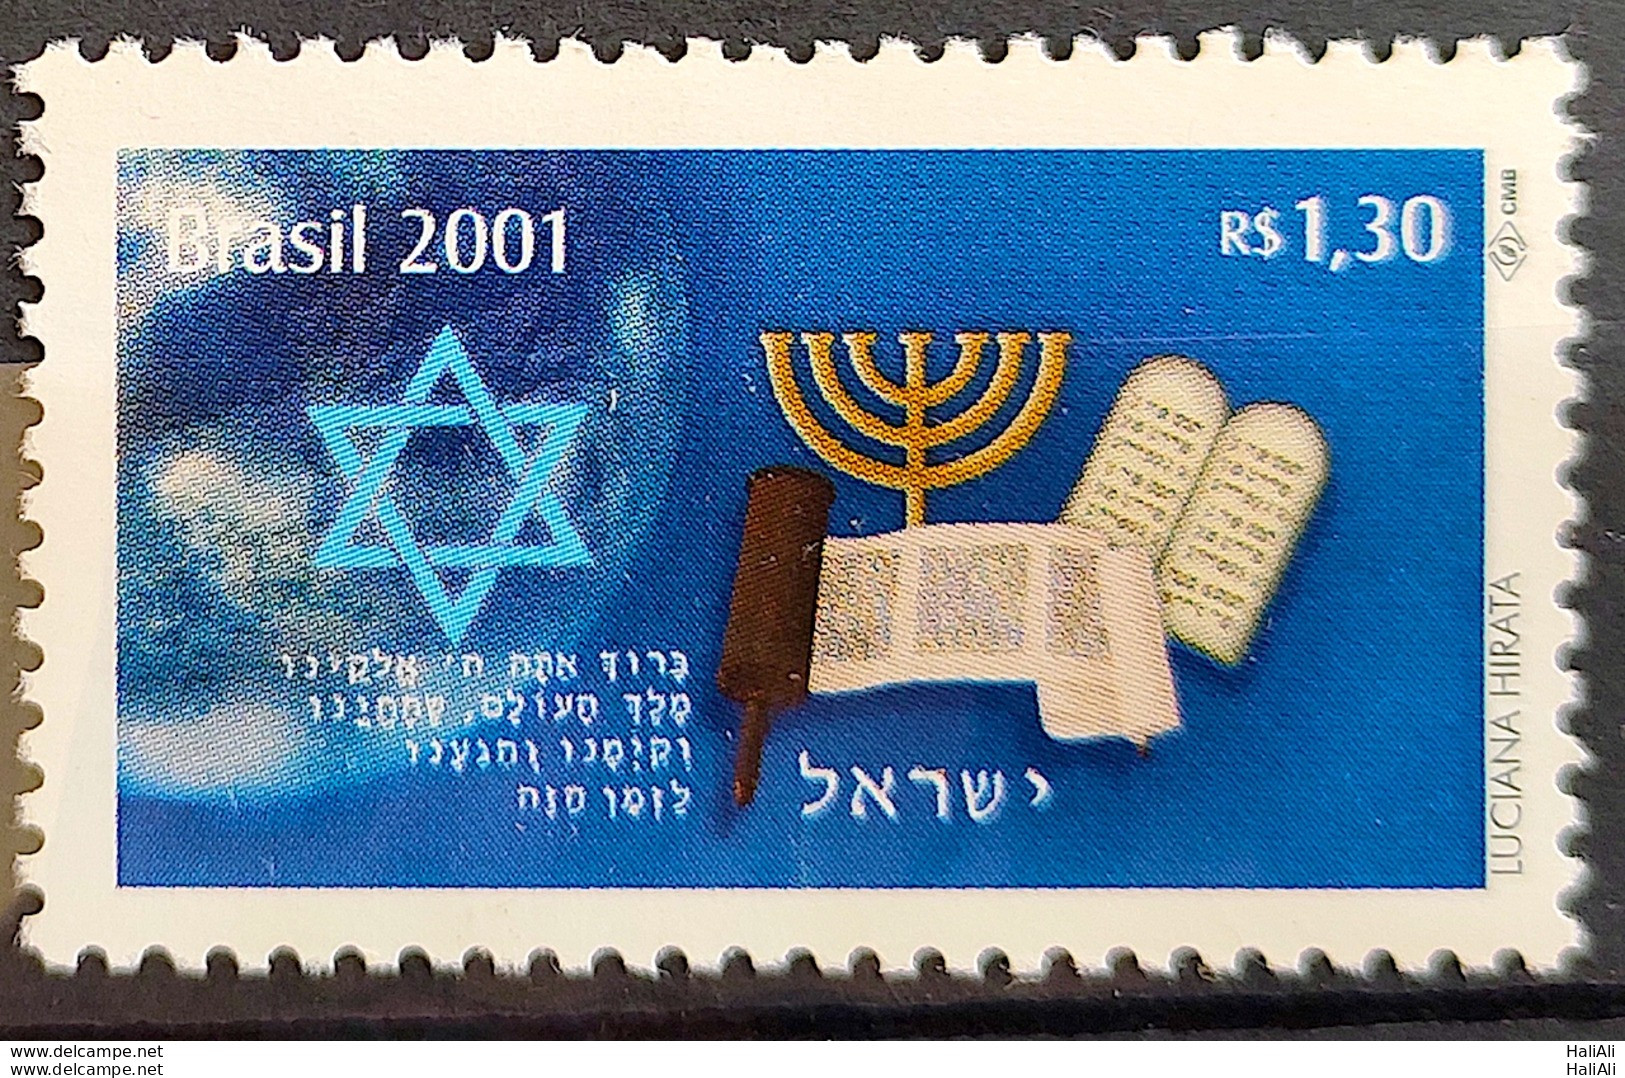 C 2355 Brazil Stamp Religion Judaism Israel 2001 - Unused Stamps